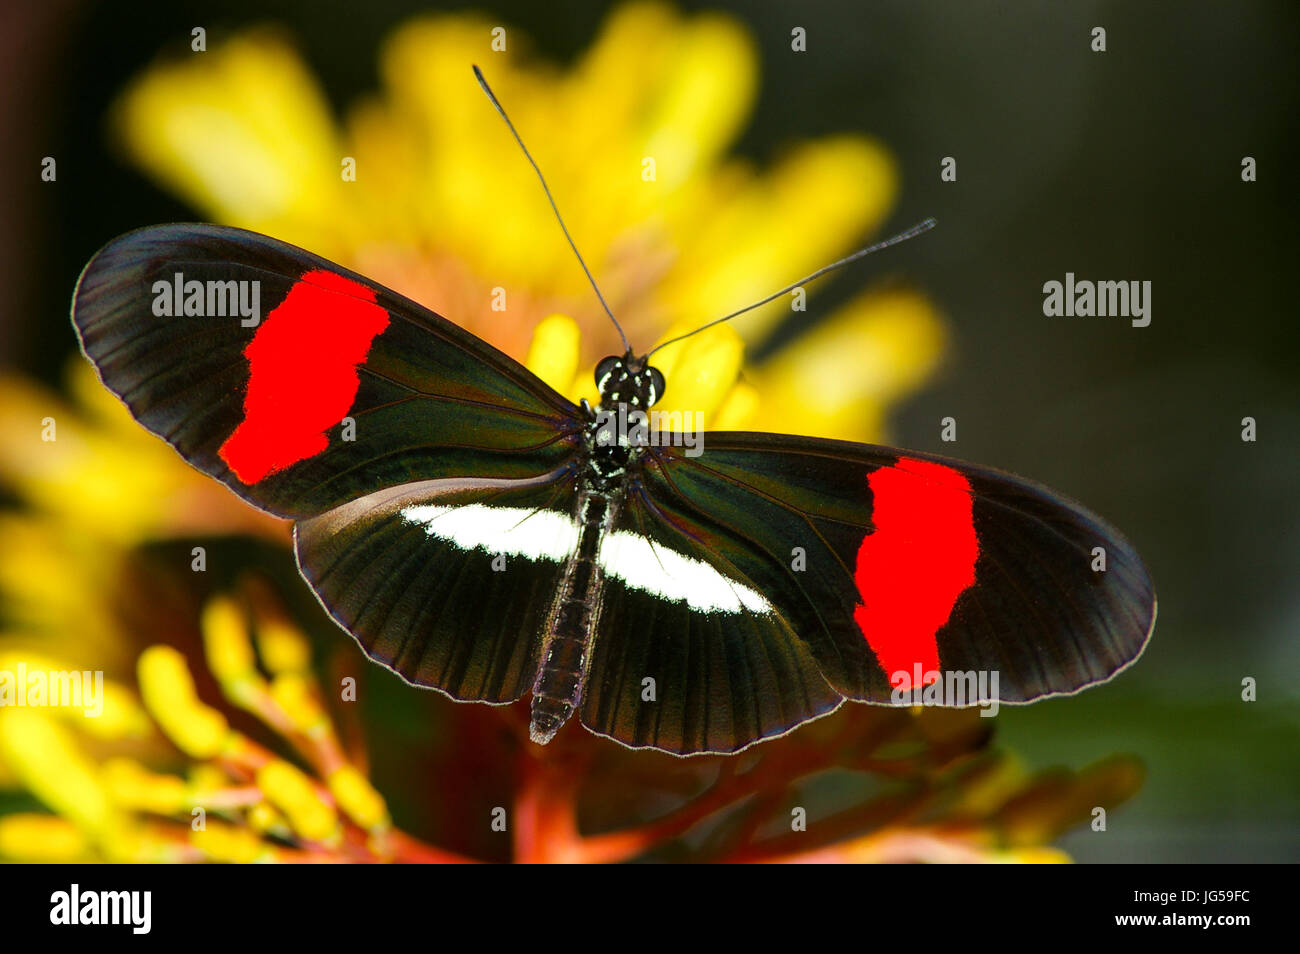 Postman butterfly Heliconius melpomene image prise au Panama Banque D'Images